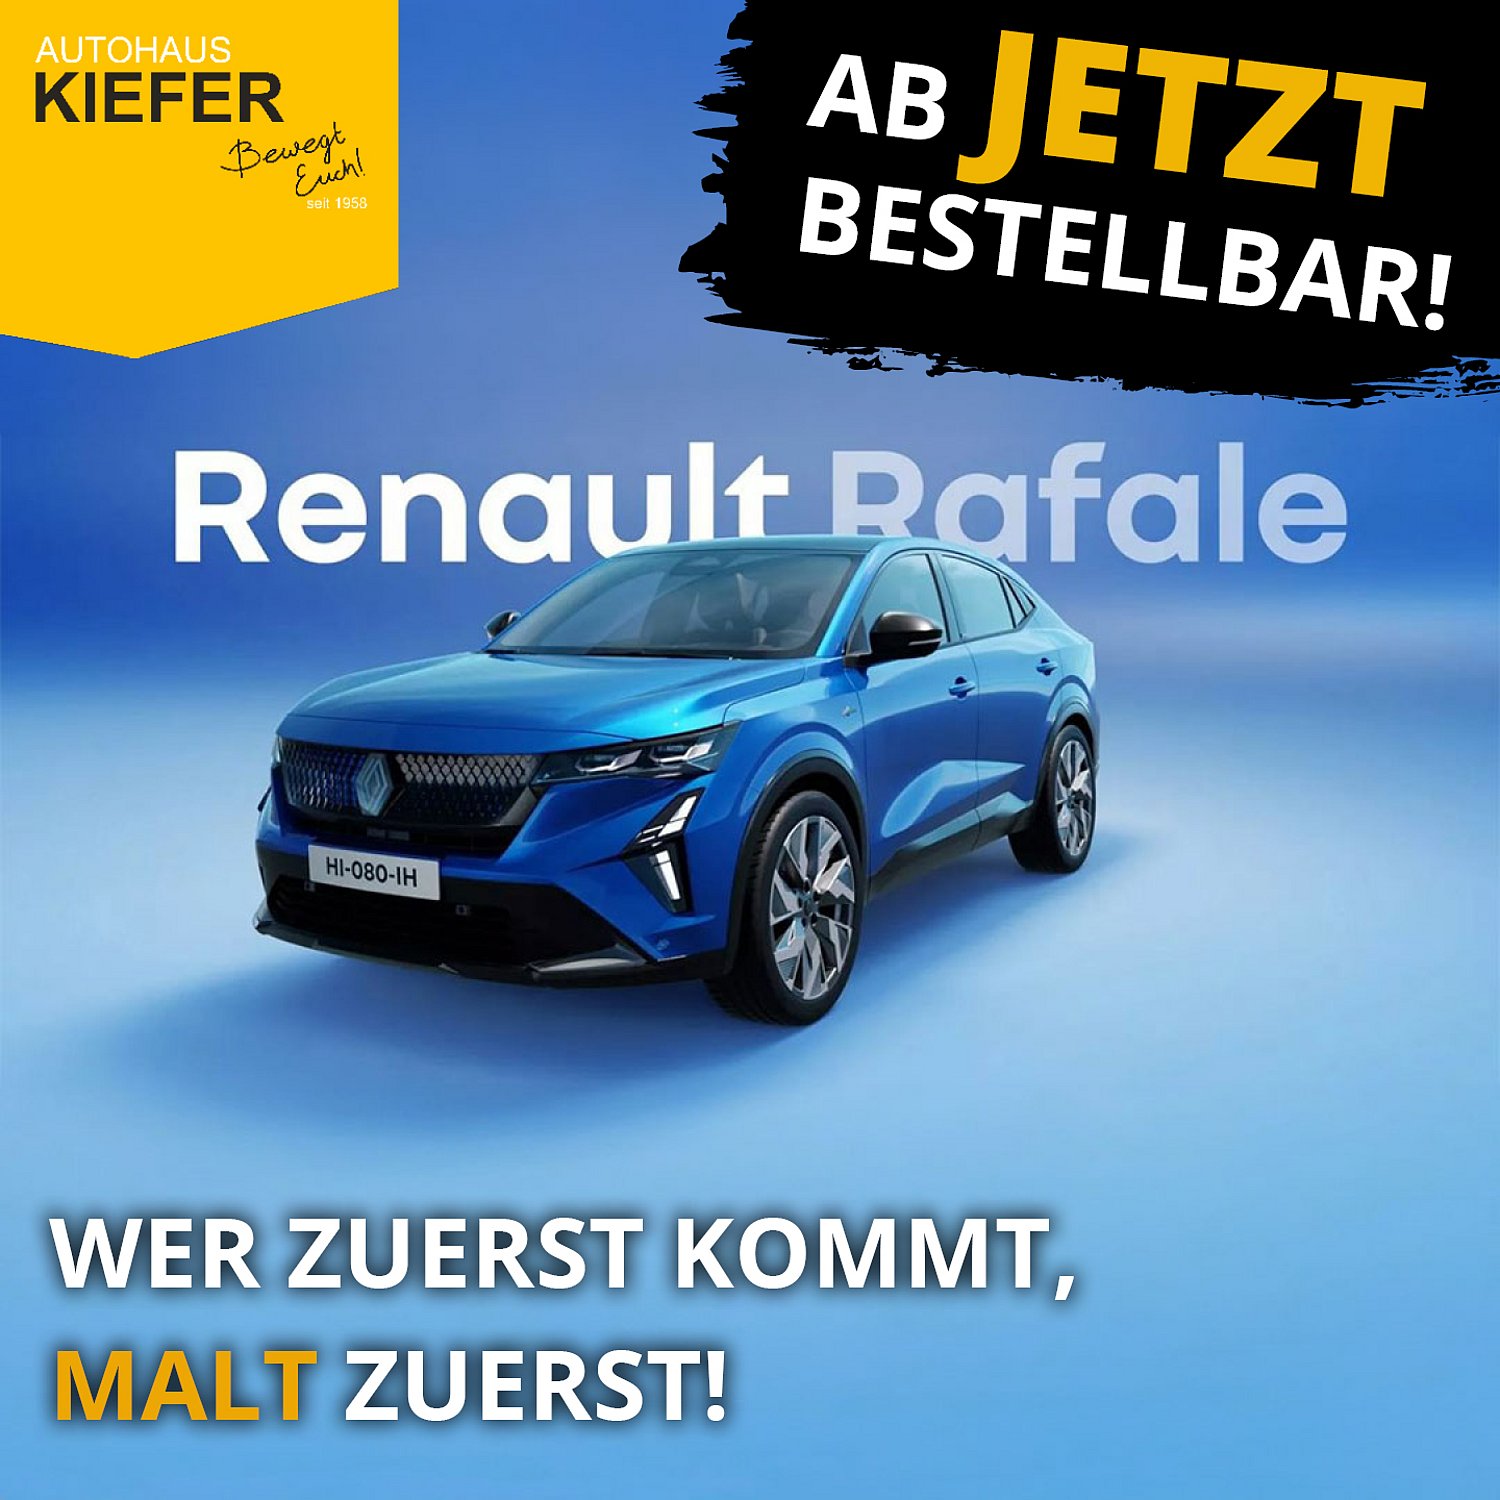 Autohaus Kiefer - Renault Rafale